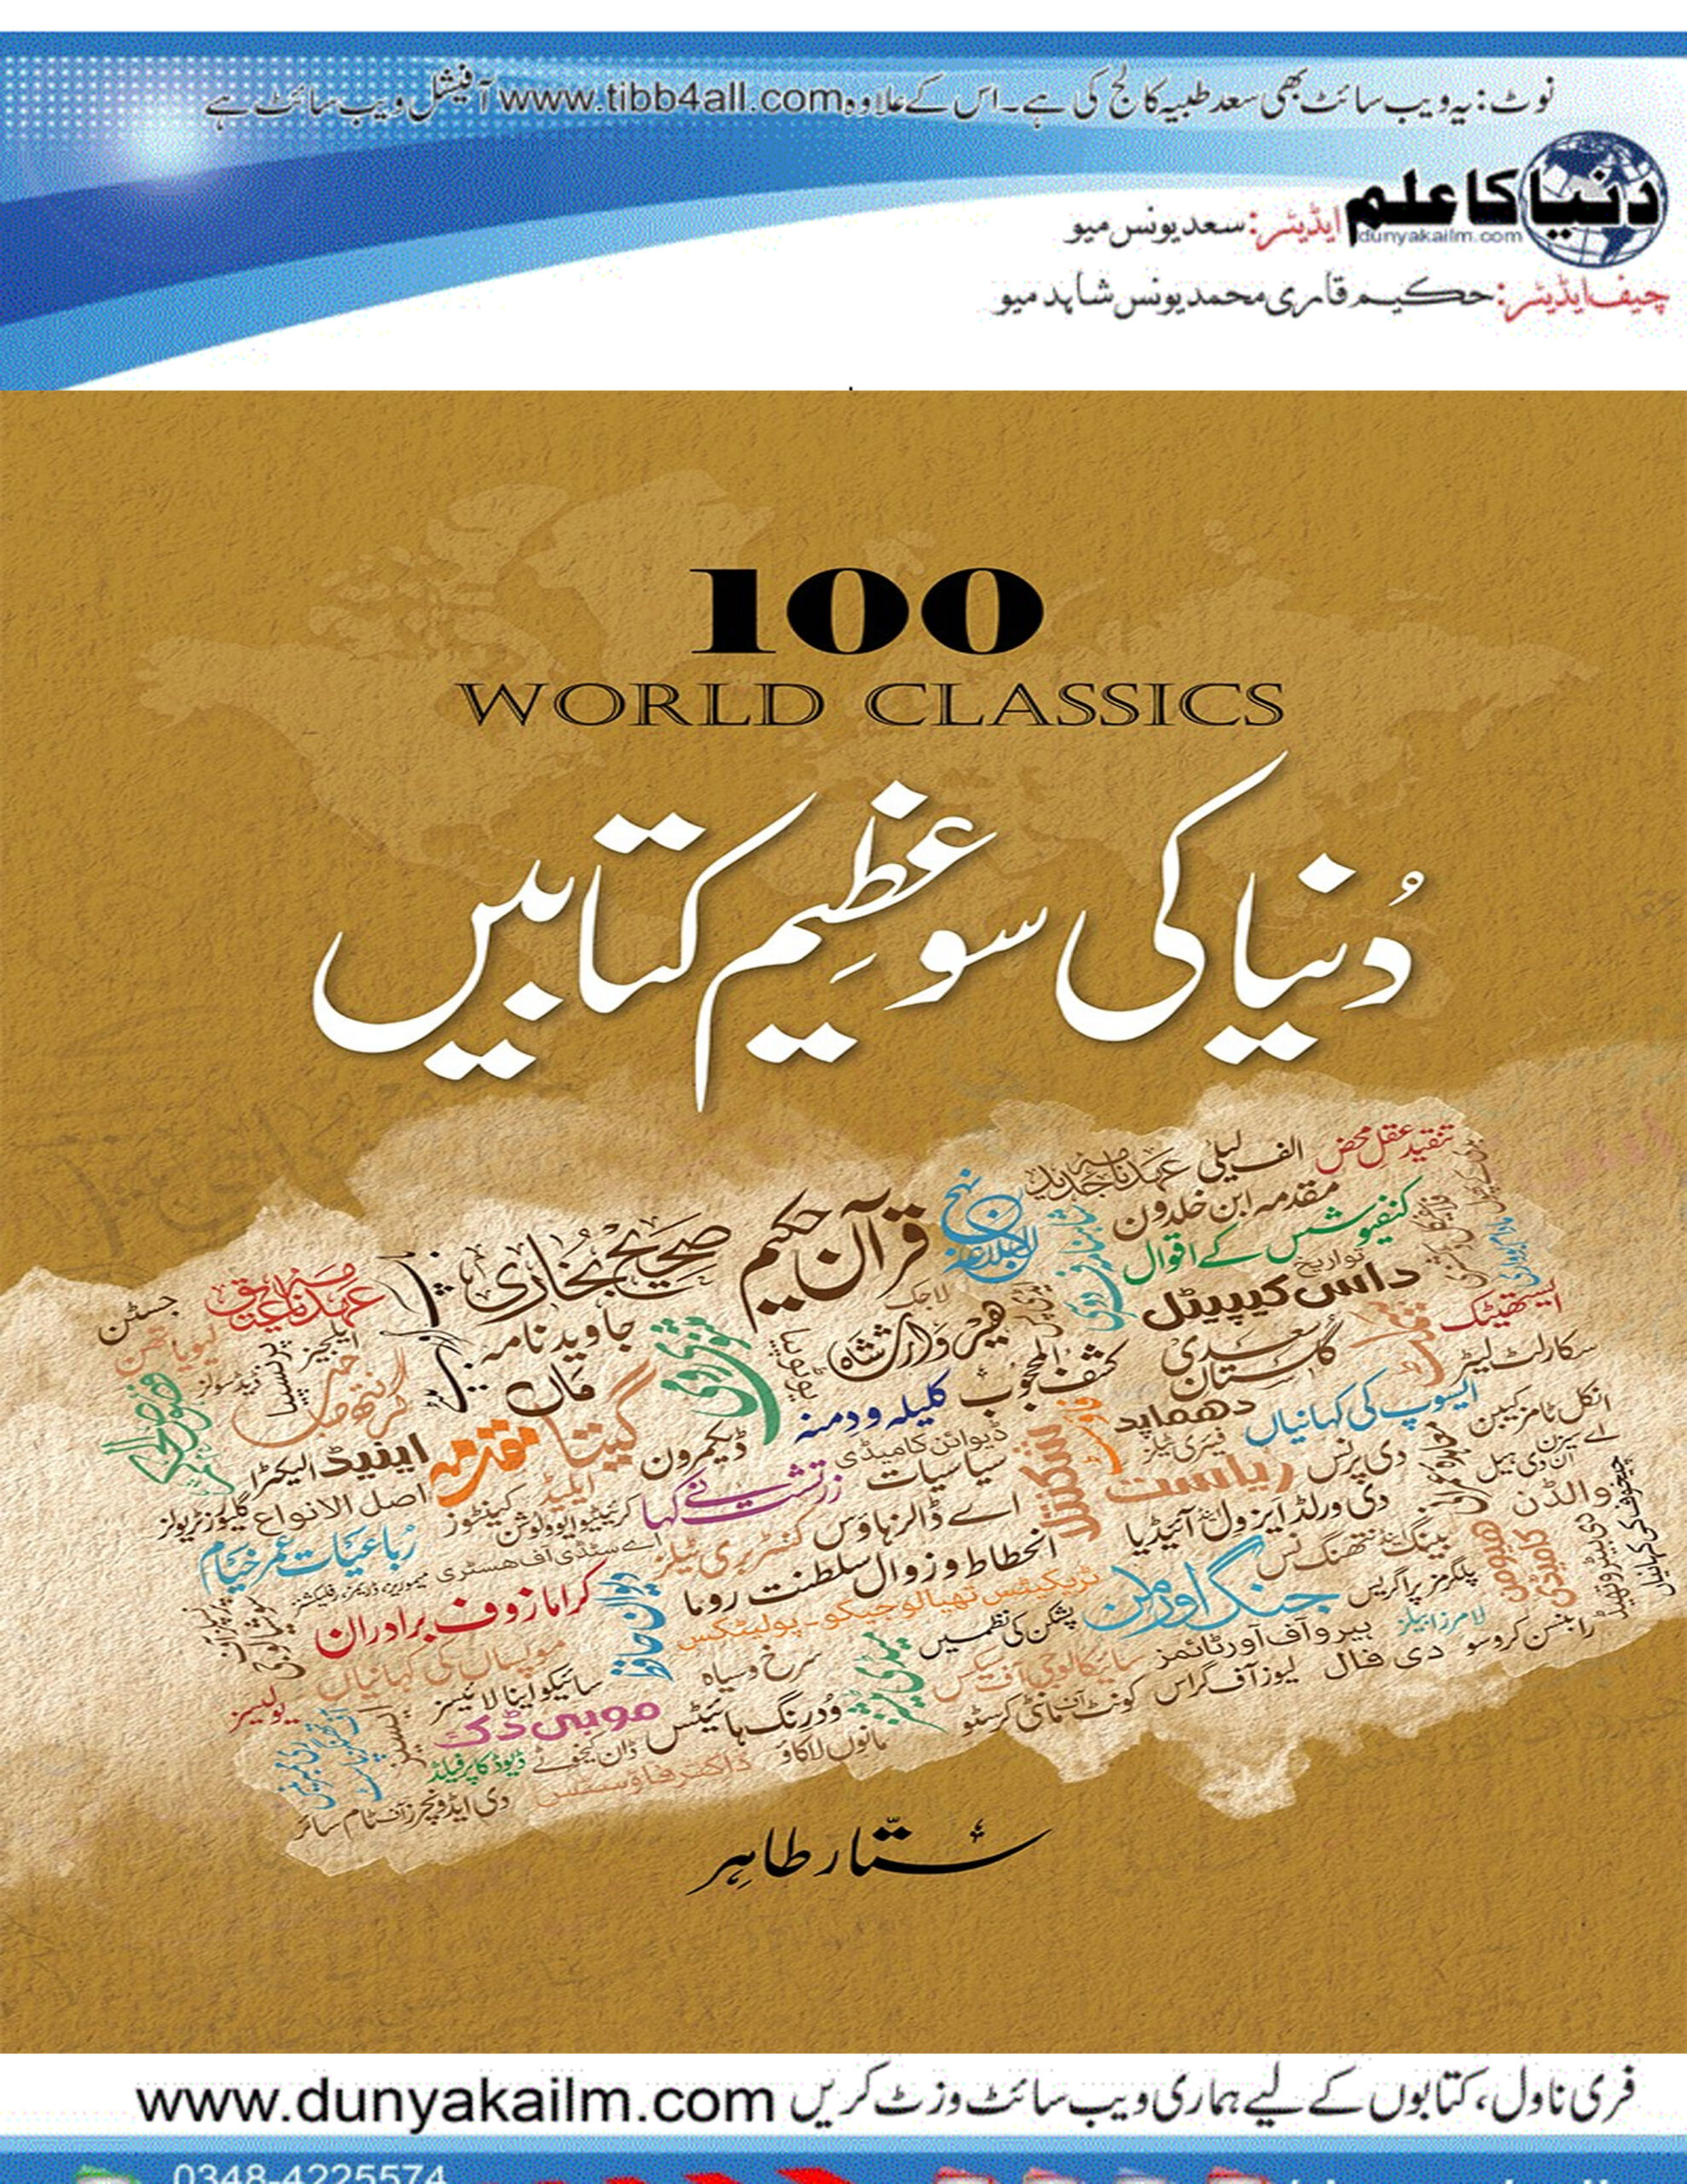 1 / 1 – World 100 Great Books in Urdu by Sattar Tahir PDF(www.dunyakailm.com).jpg
